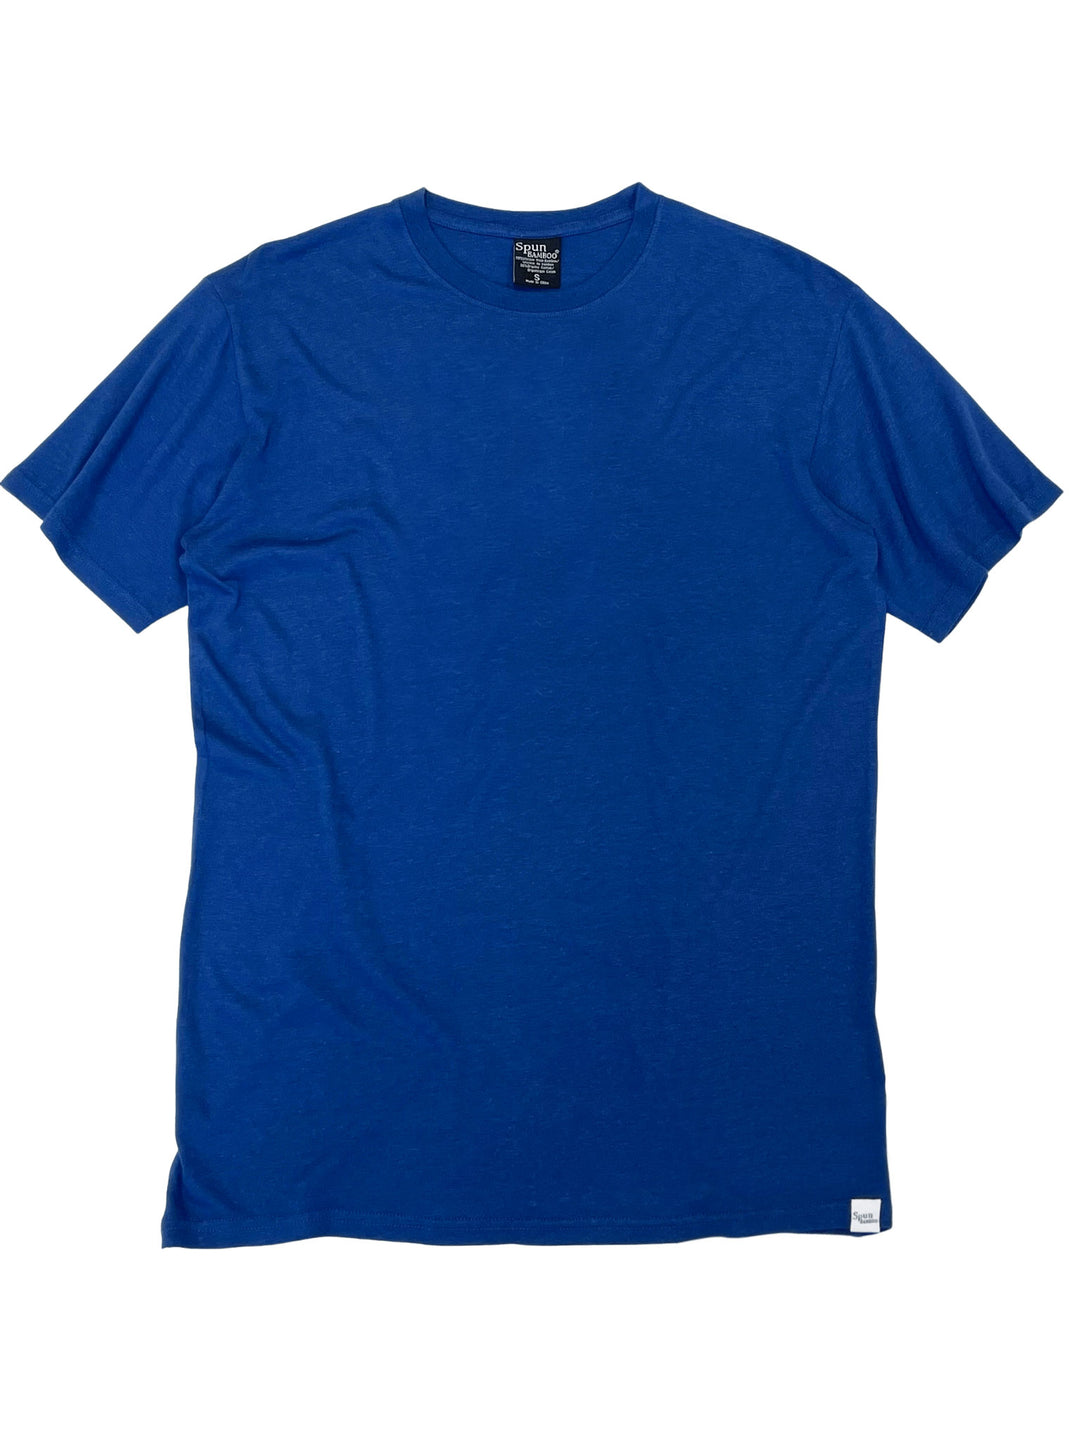 The Original Men's Bamboo Viscose/Organic Cotton Short Sleeve T-Shirt - Classic Cut